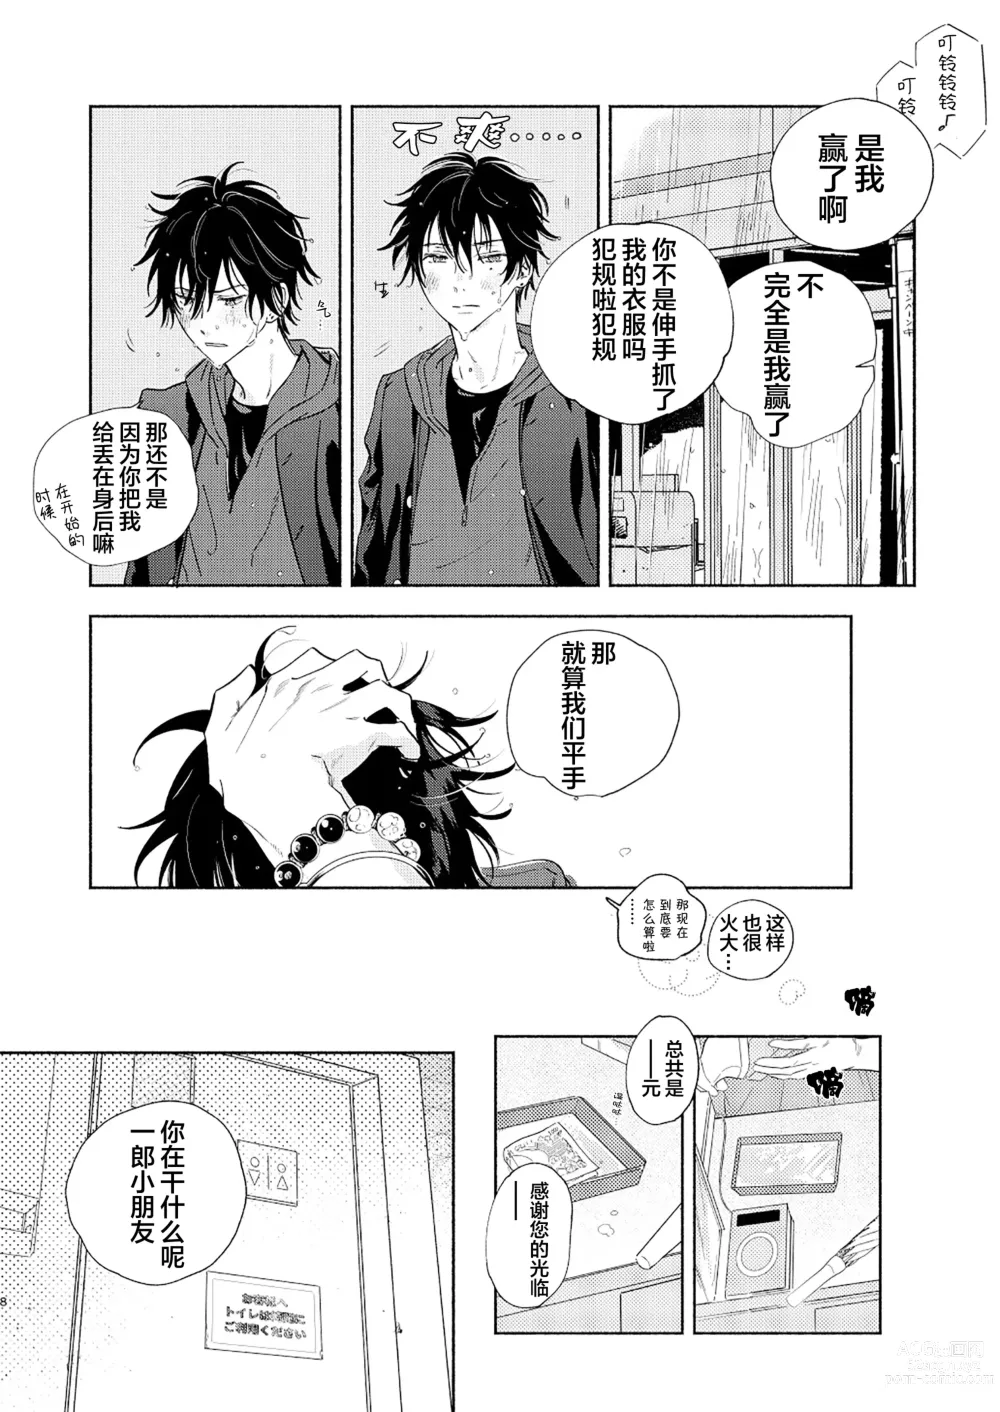 Page 5 of doujinshi 缺失的碎片